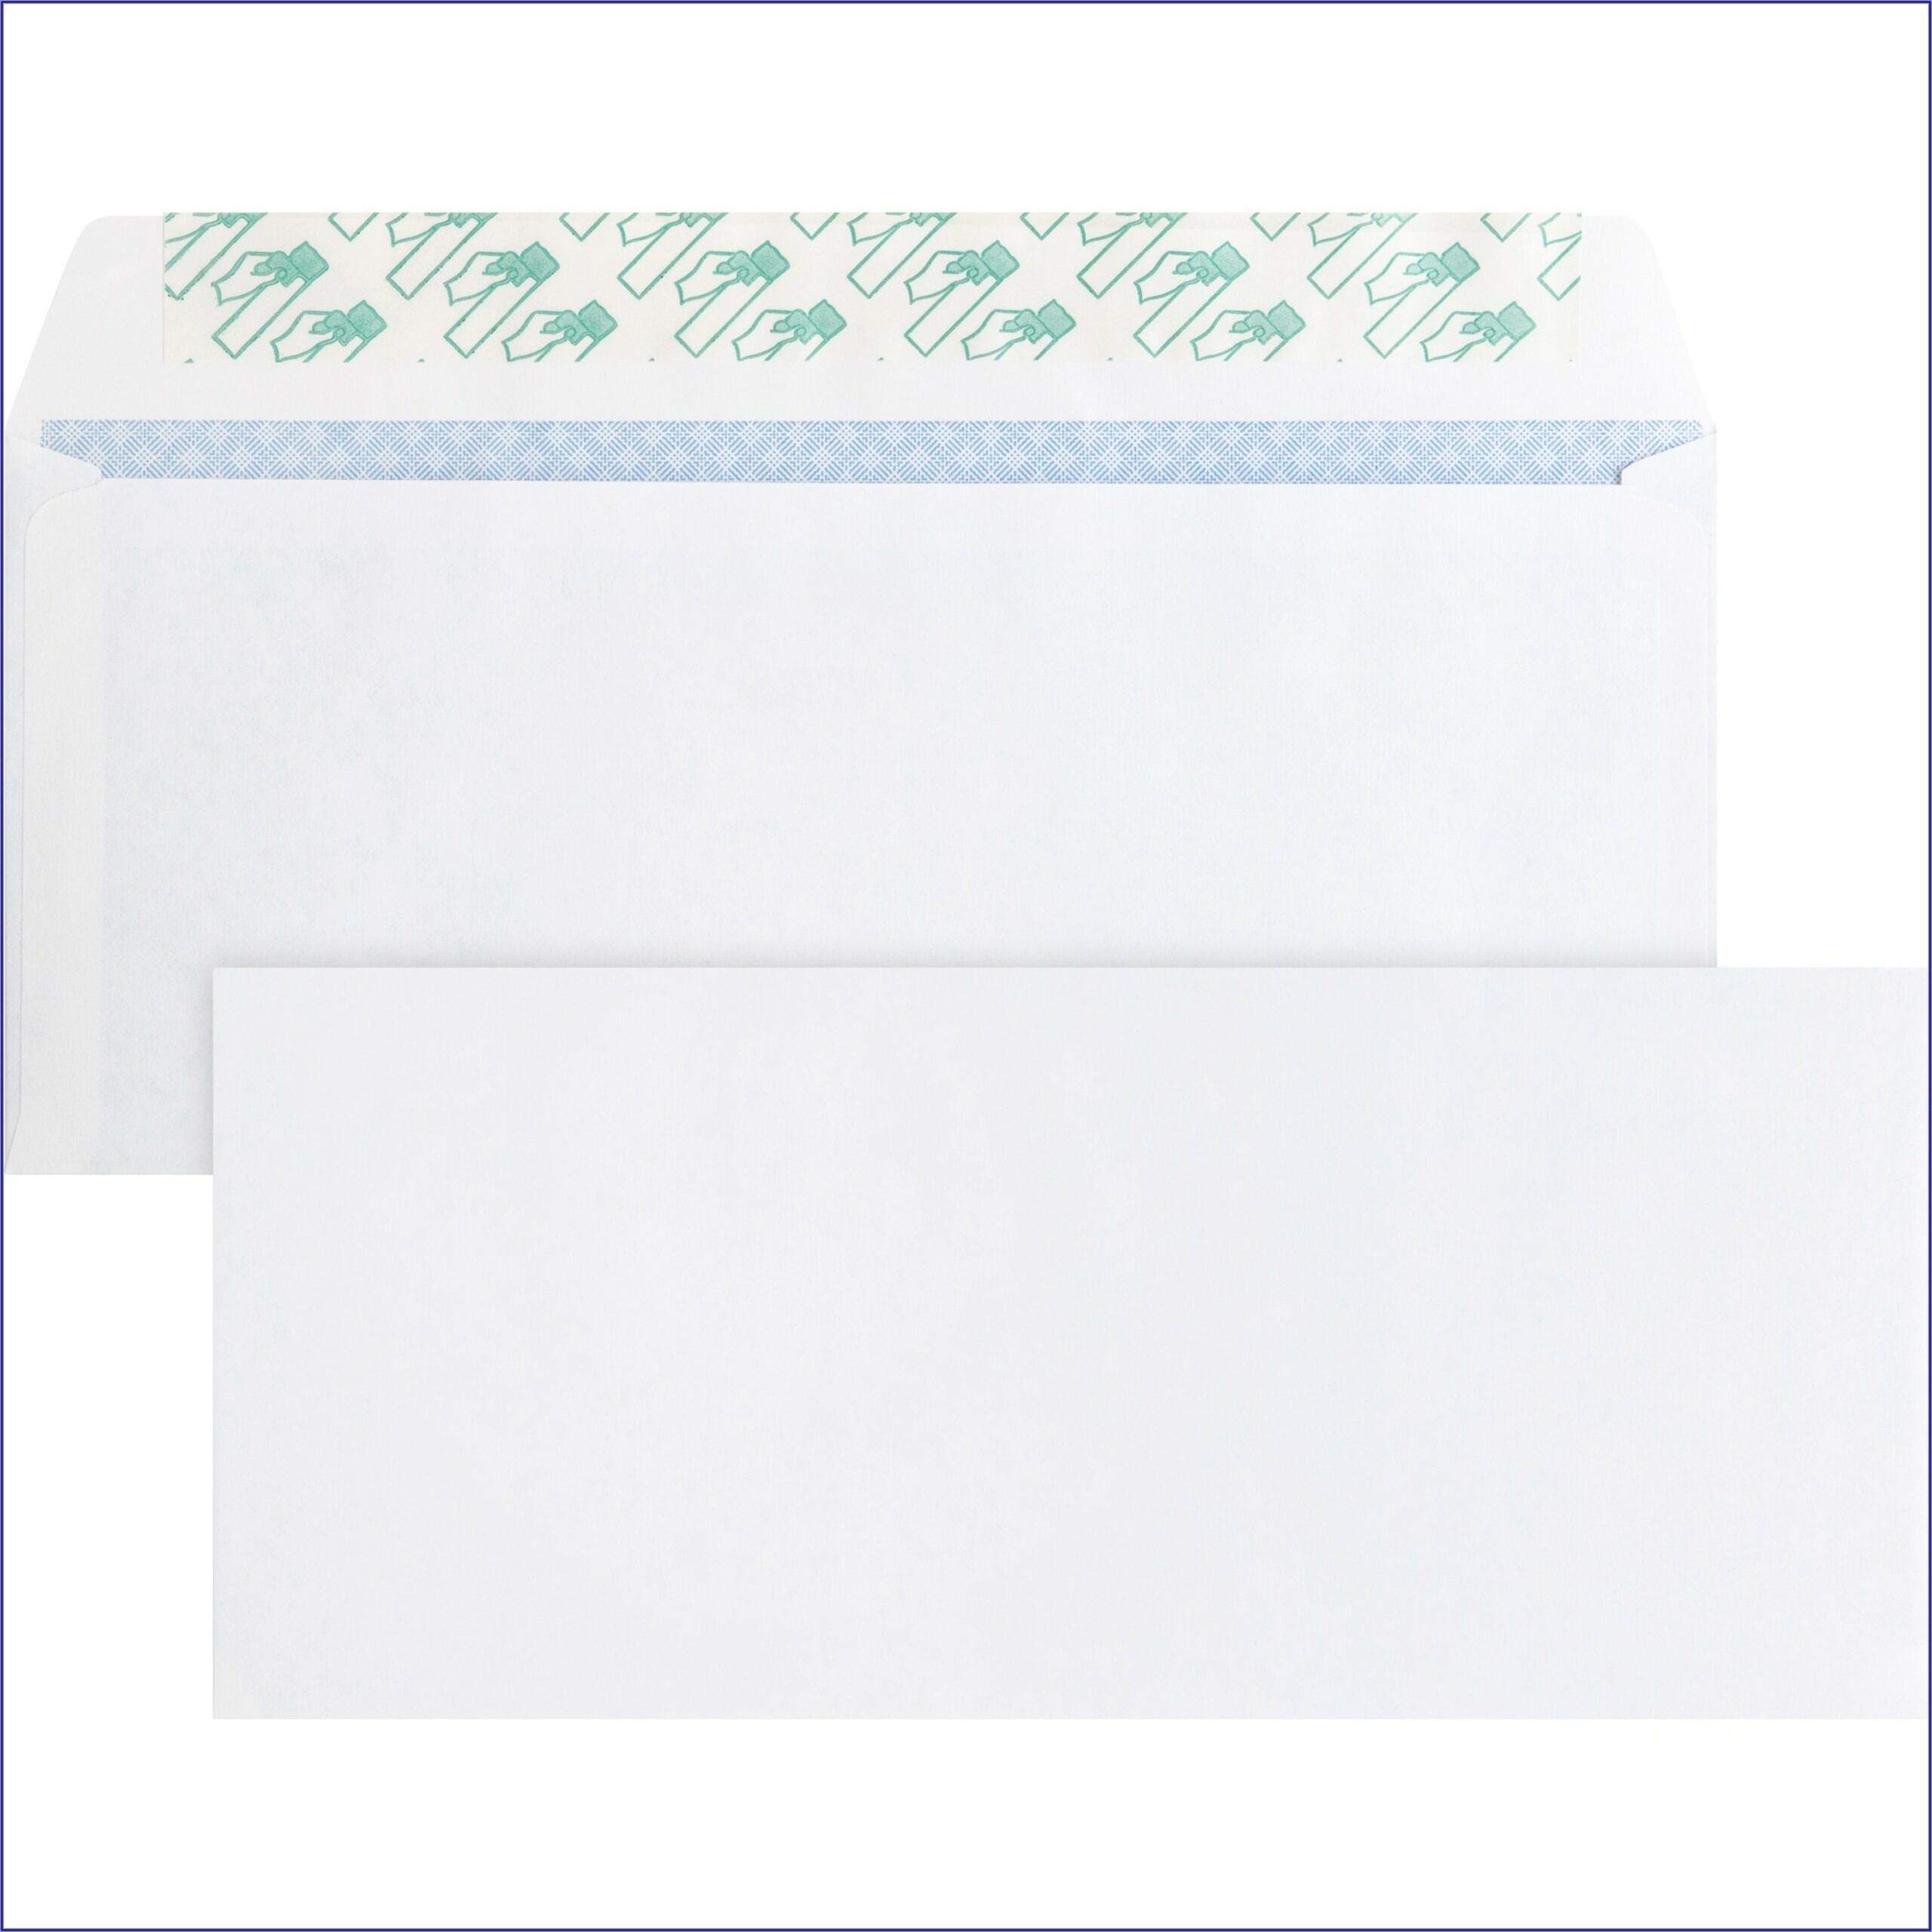 Columbian Envelopes Security Tint 10 Grip Seal 500 Count